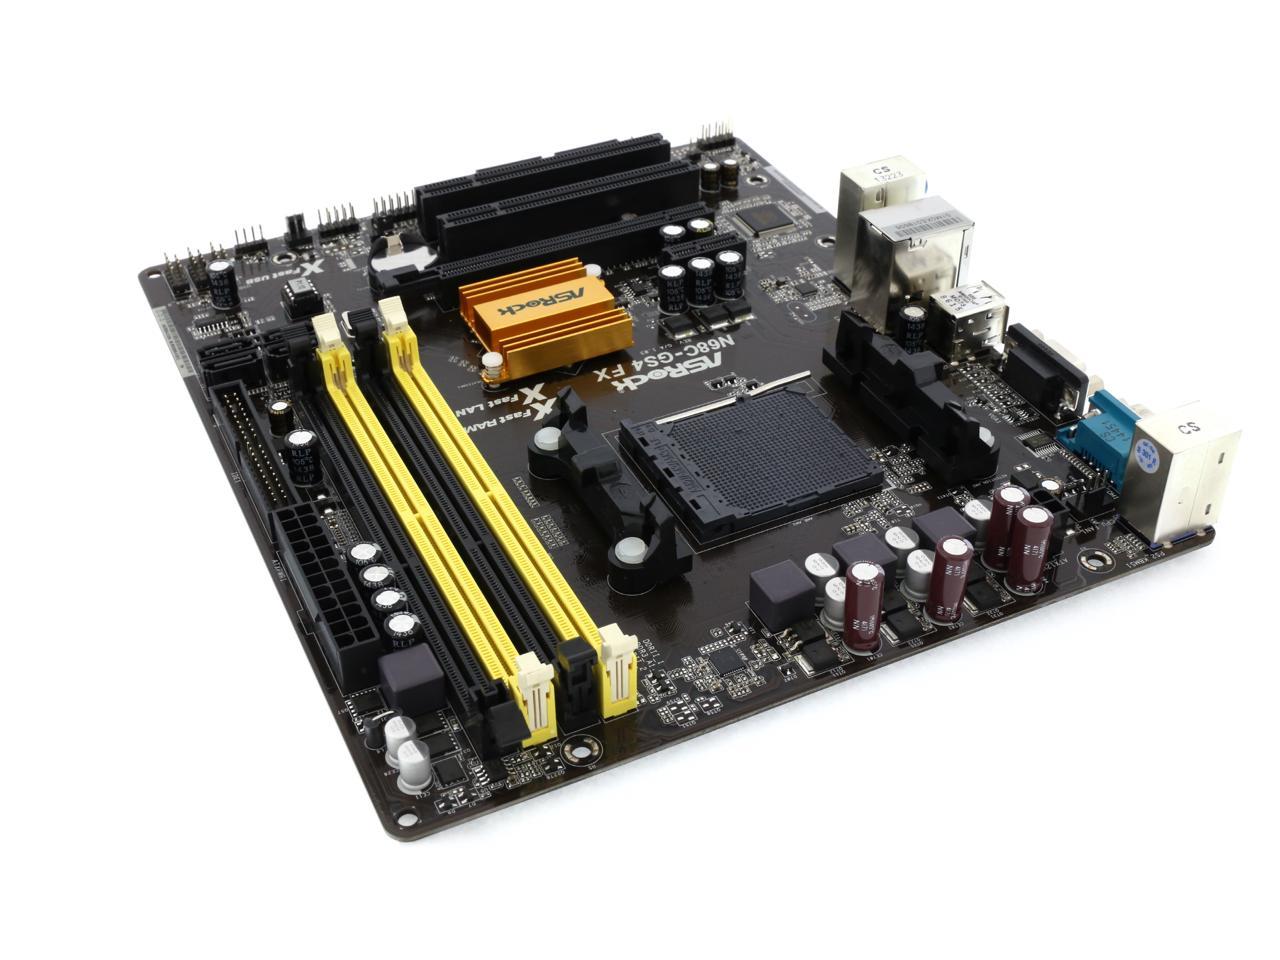 ASRock N68C-GS4 FX 95W Socket AM3+ / AM3 / AM2+ / AM2 processors NVIDIA GeForce 7025 / nForce 630a Micro ATX AMD Motherboard